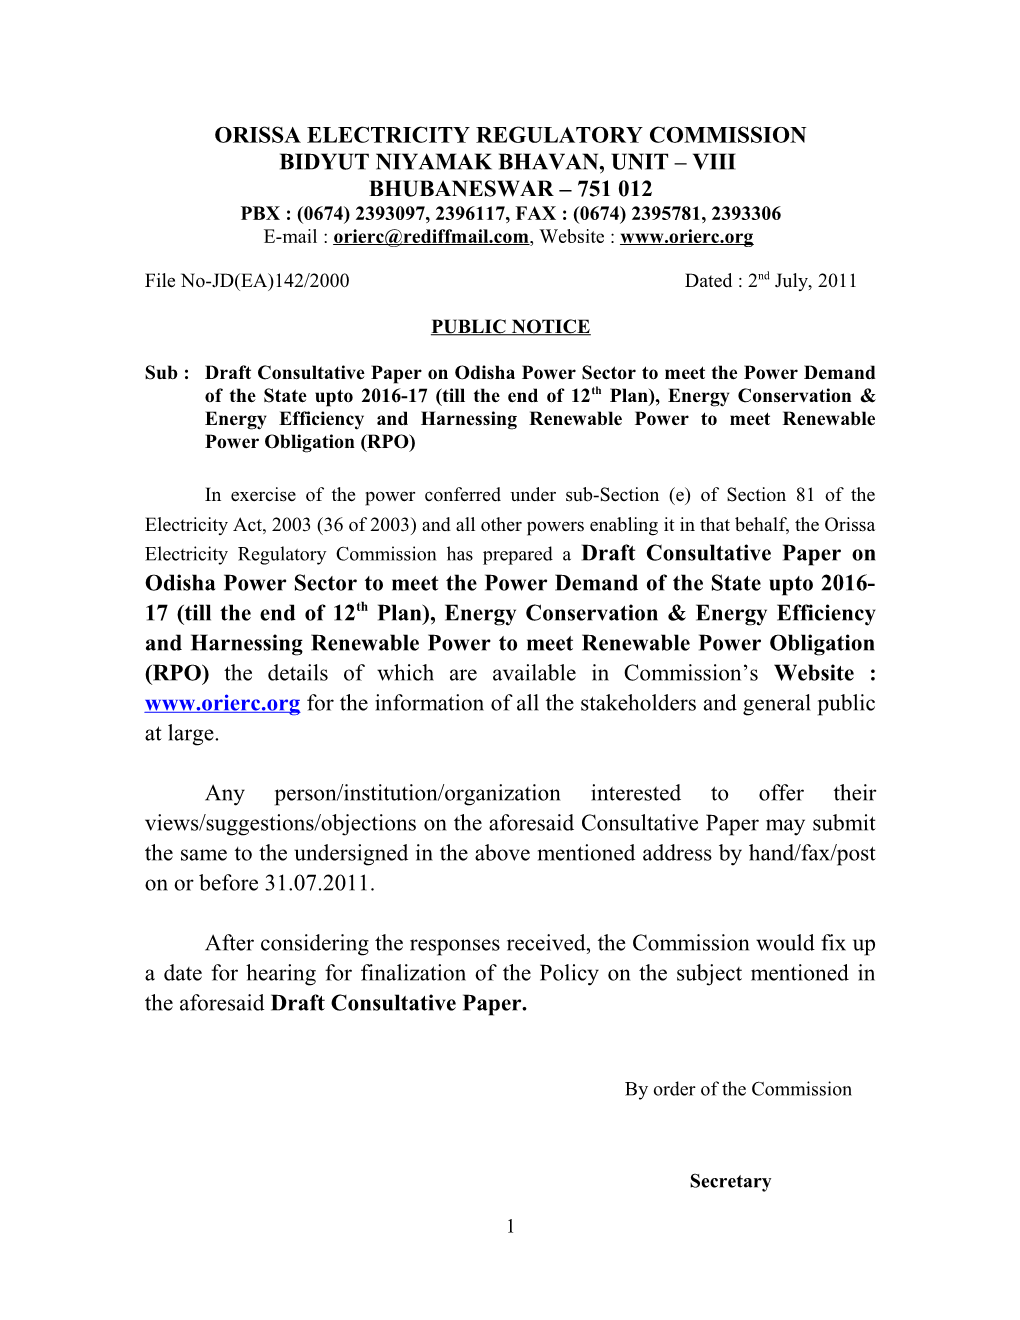 Orissa Electricity Regulatory Commission